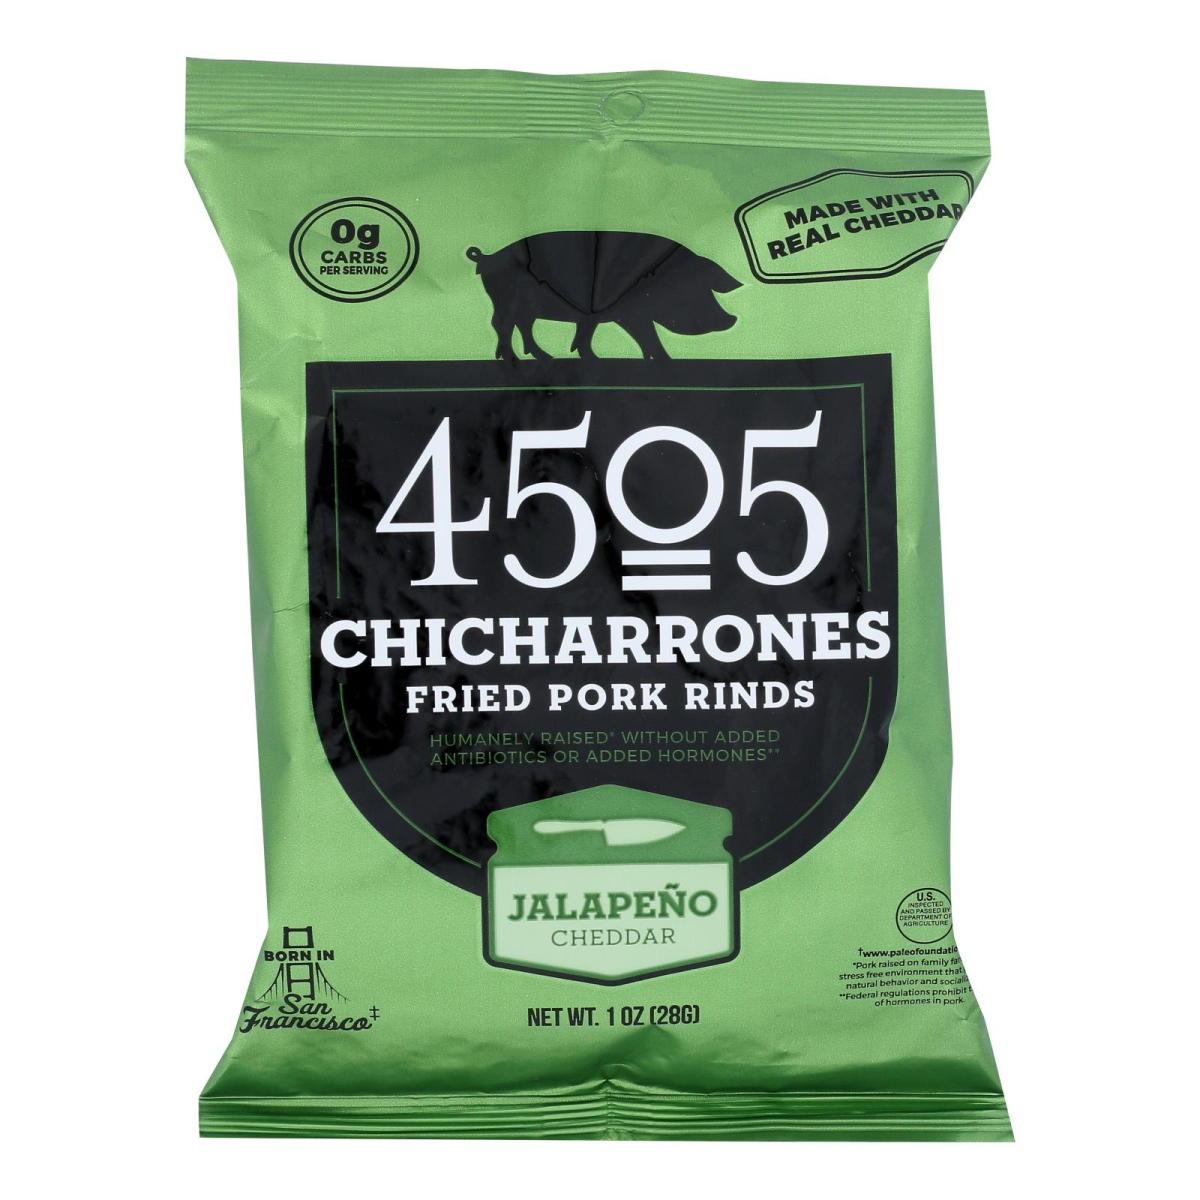 Picture of 4505 Chicharrones HG2554376 1 oz Chicharrones Jalapeno Cheddar for Pet Food - Case of 12